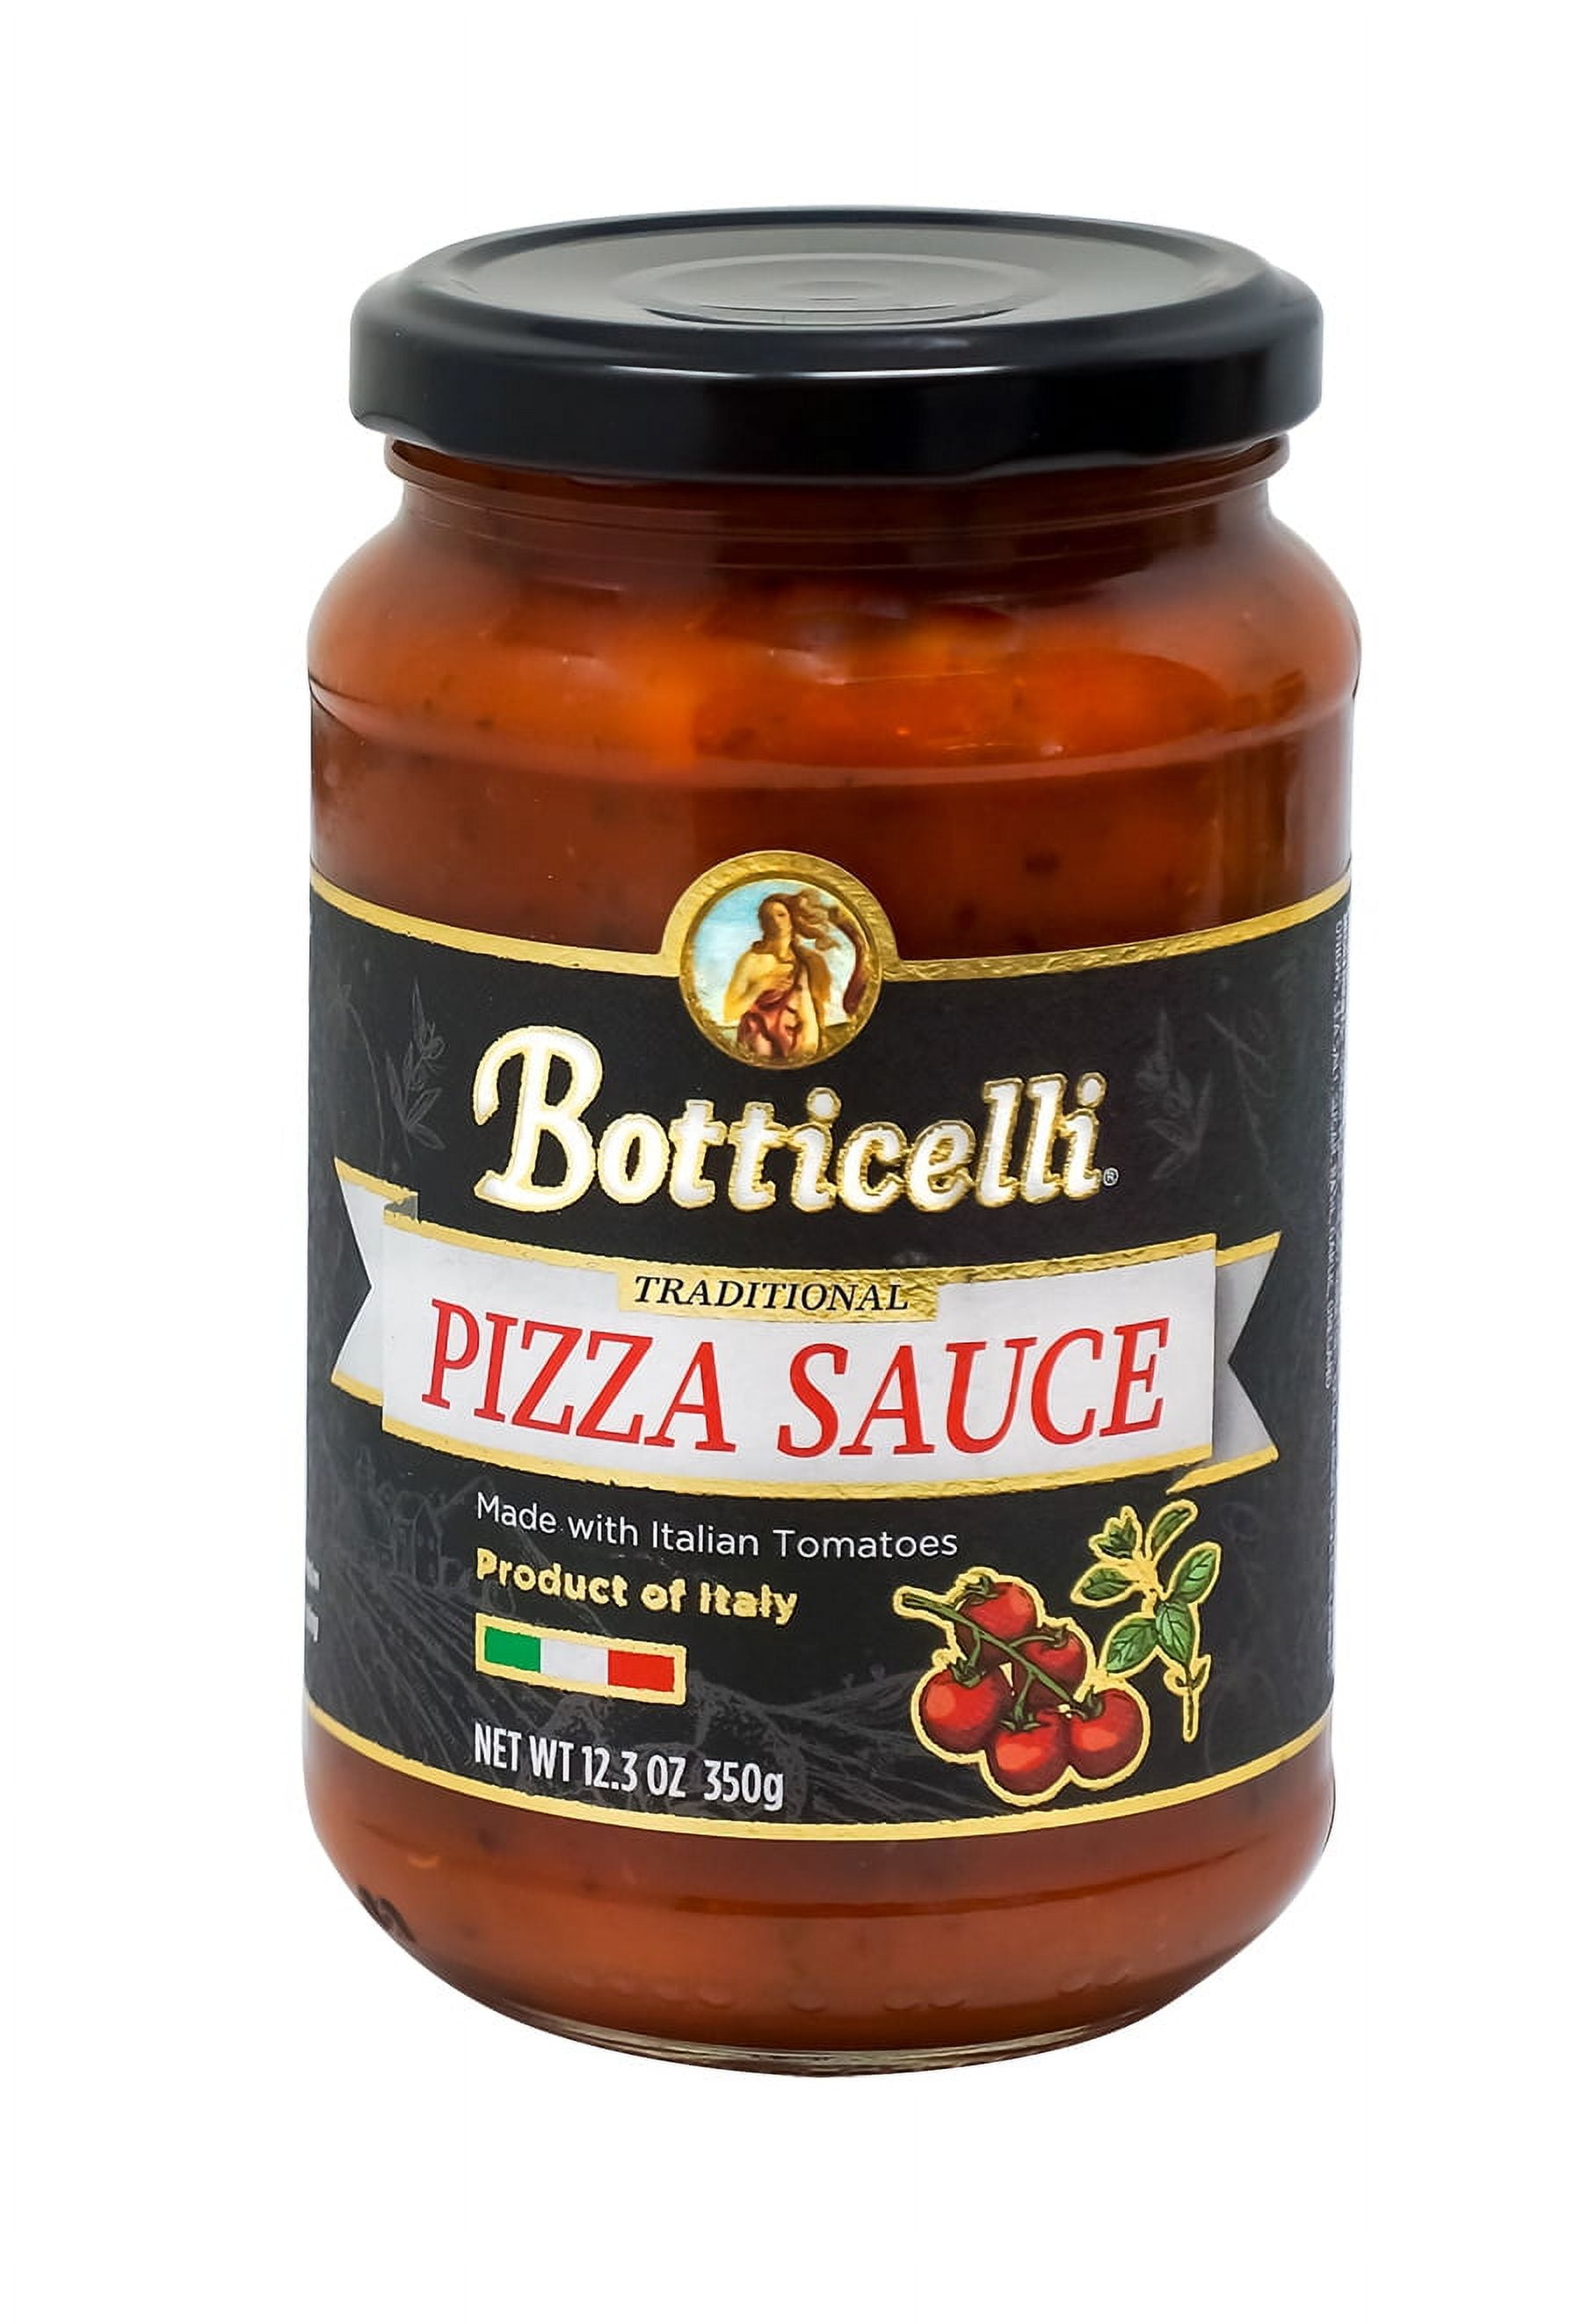 Botticelli Premium Italian Pizza Sauce for Authentic Italian Taste - Low  Carb Low Sugar Keto Pizza Sauce, 4 Count 